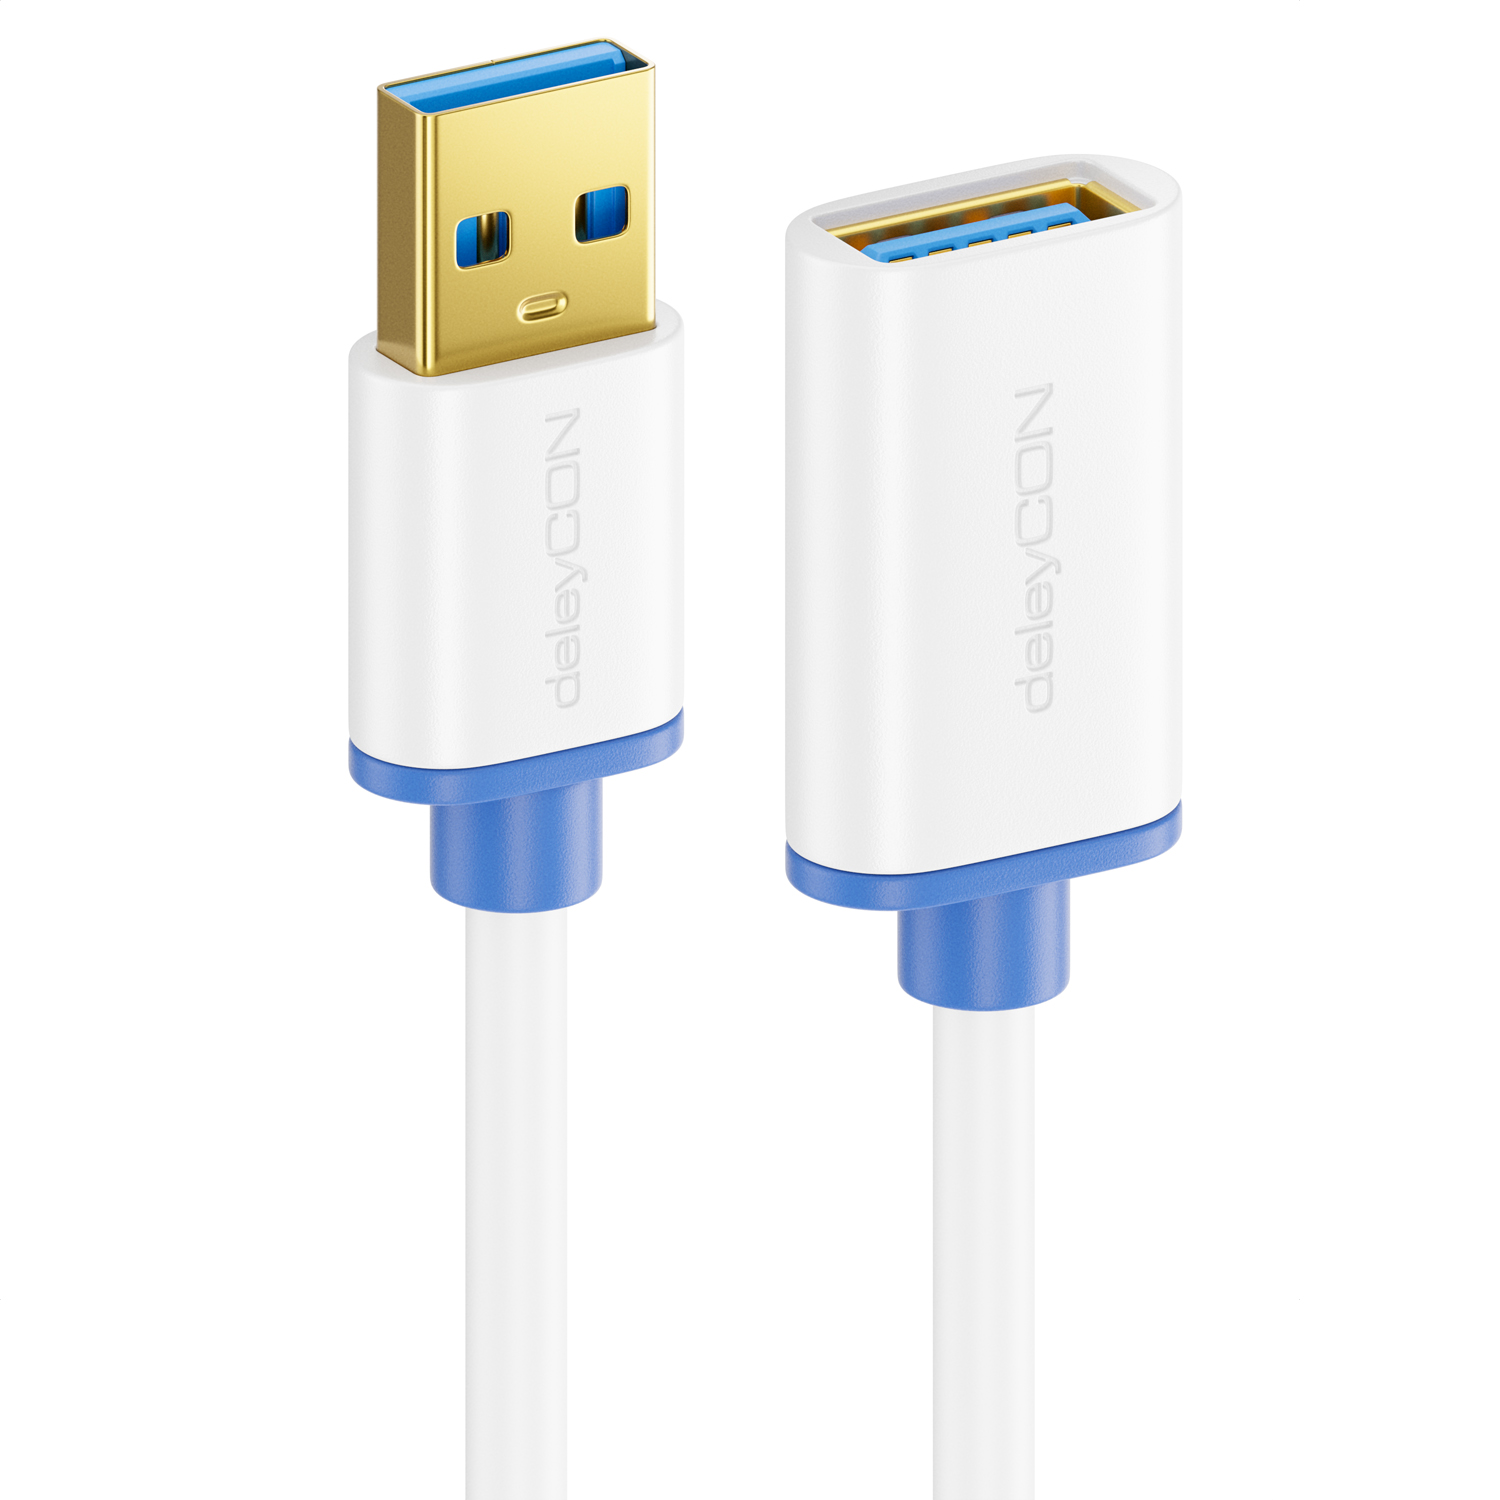 deleyCON 7,5m Aktive USB 3.0 Kabel Verlängerung mit 1 Verstärker Scanner  Drucker, USB Kabel, Kabel & Adapter